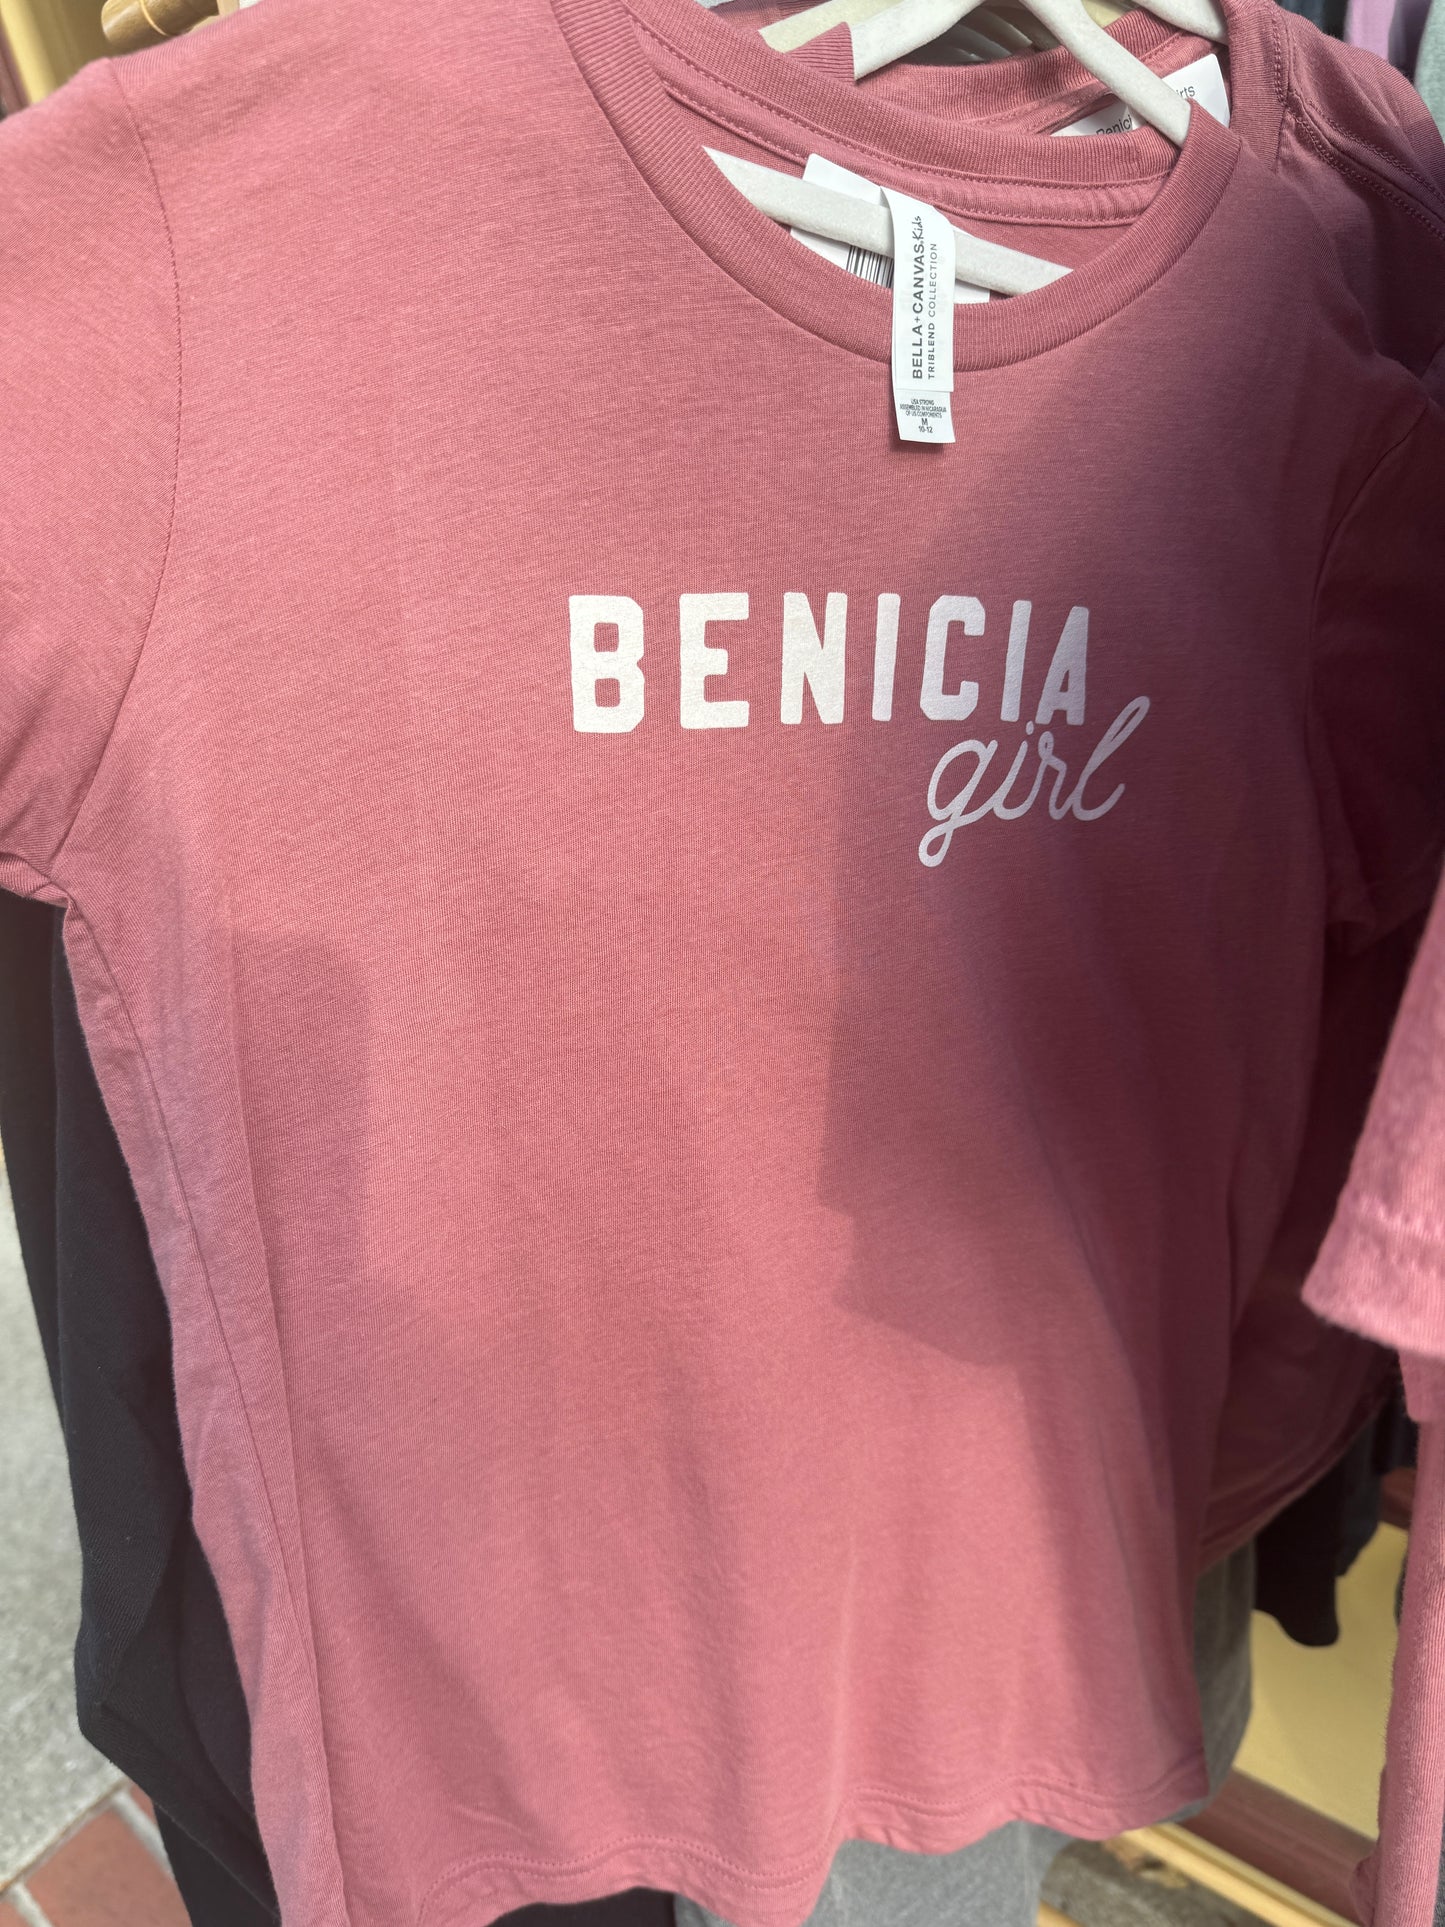 Benicia girl shirts